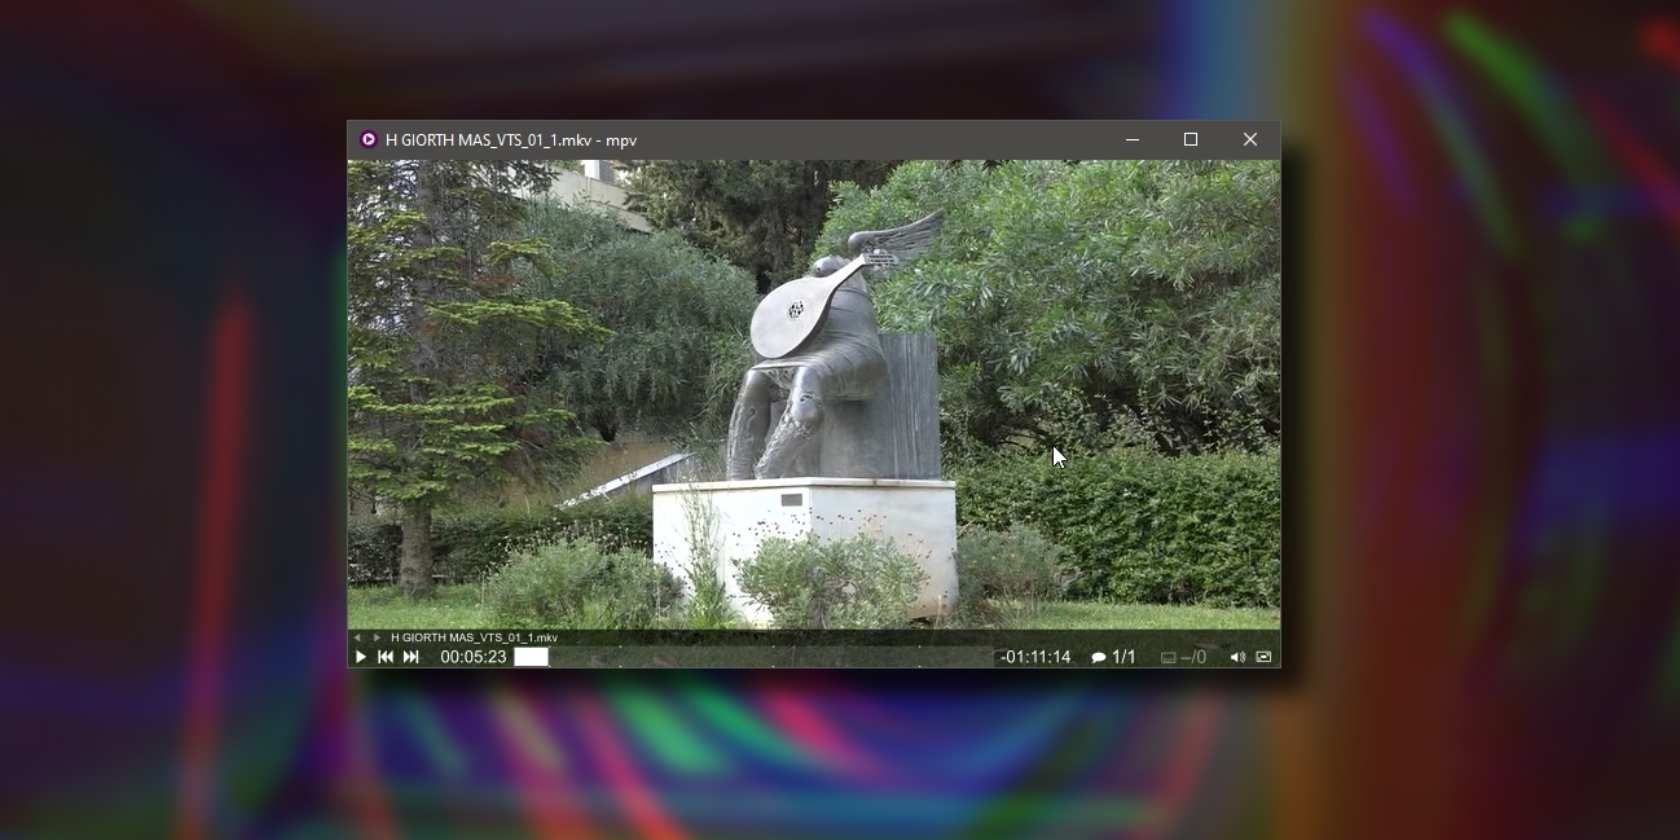 MPV featured image - MPV player over blurred camera background